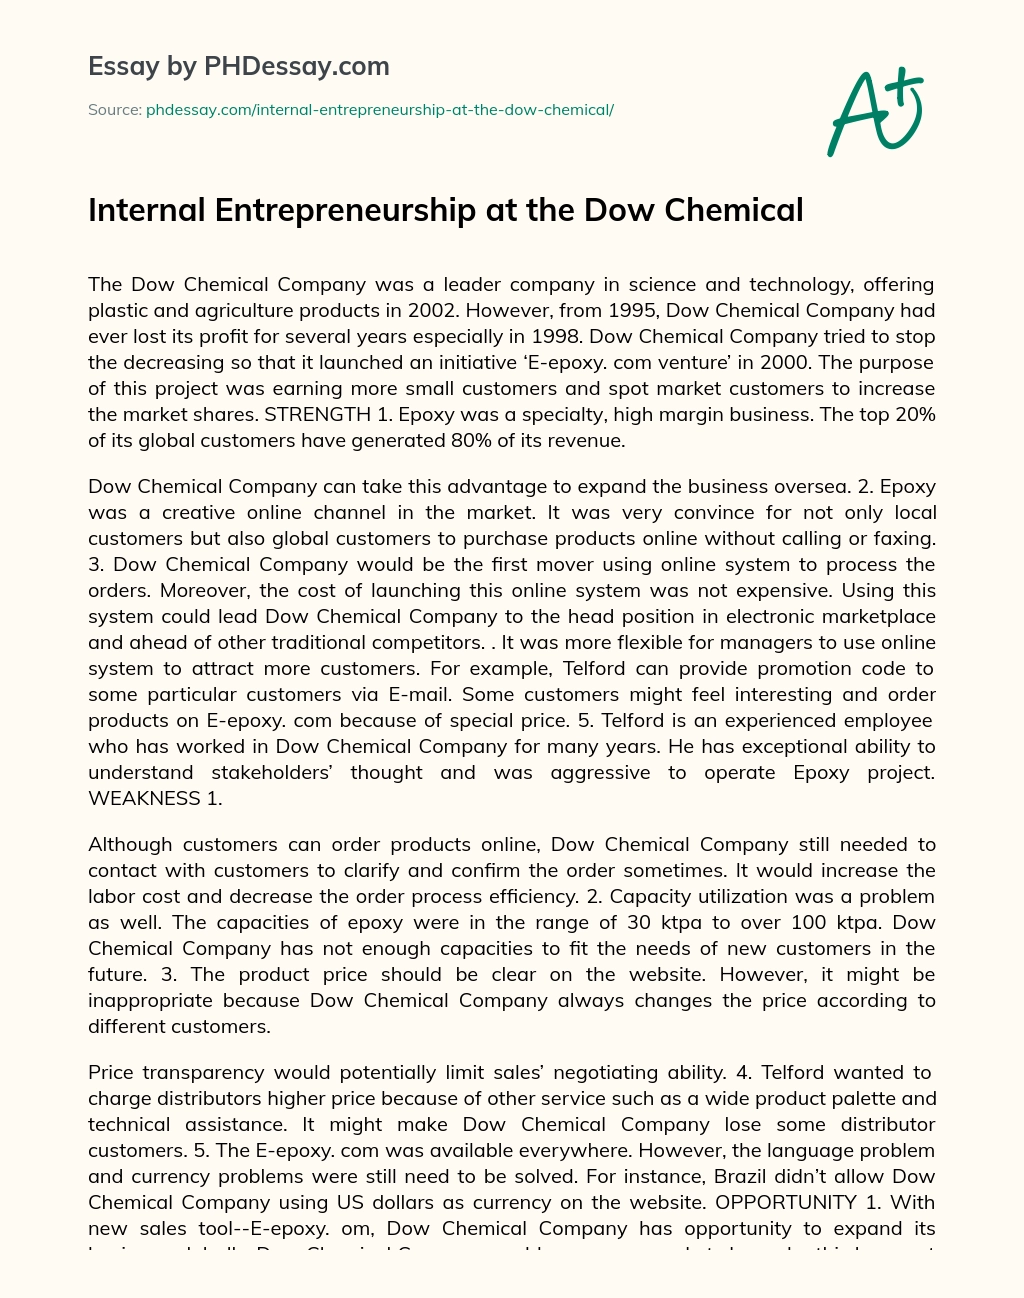 Internal Entrepreneurship at the Dow Chemical essay